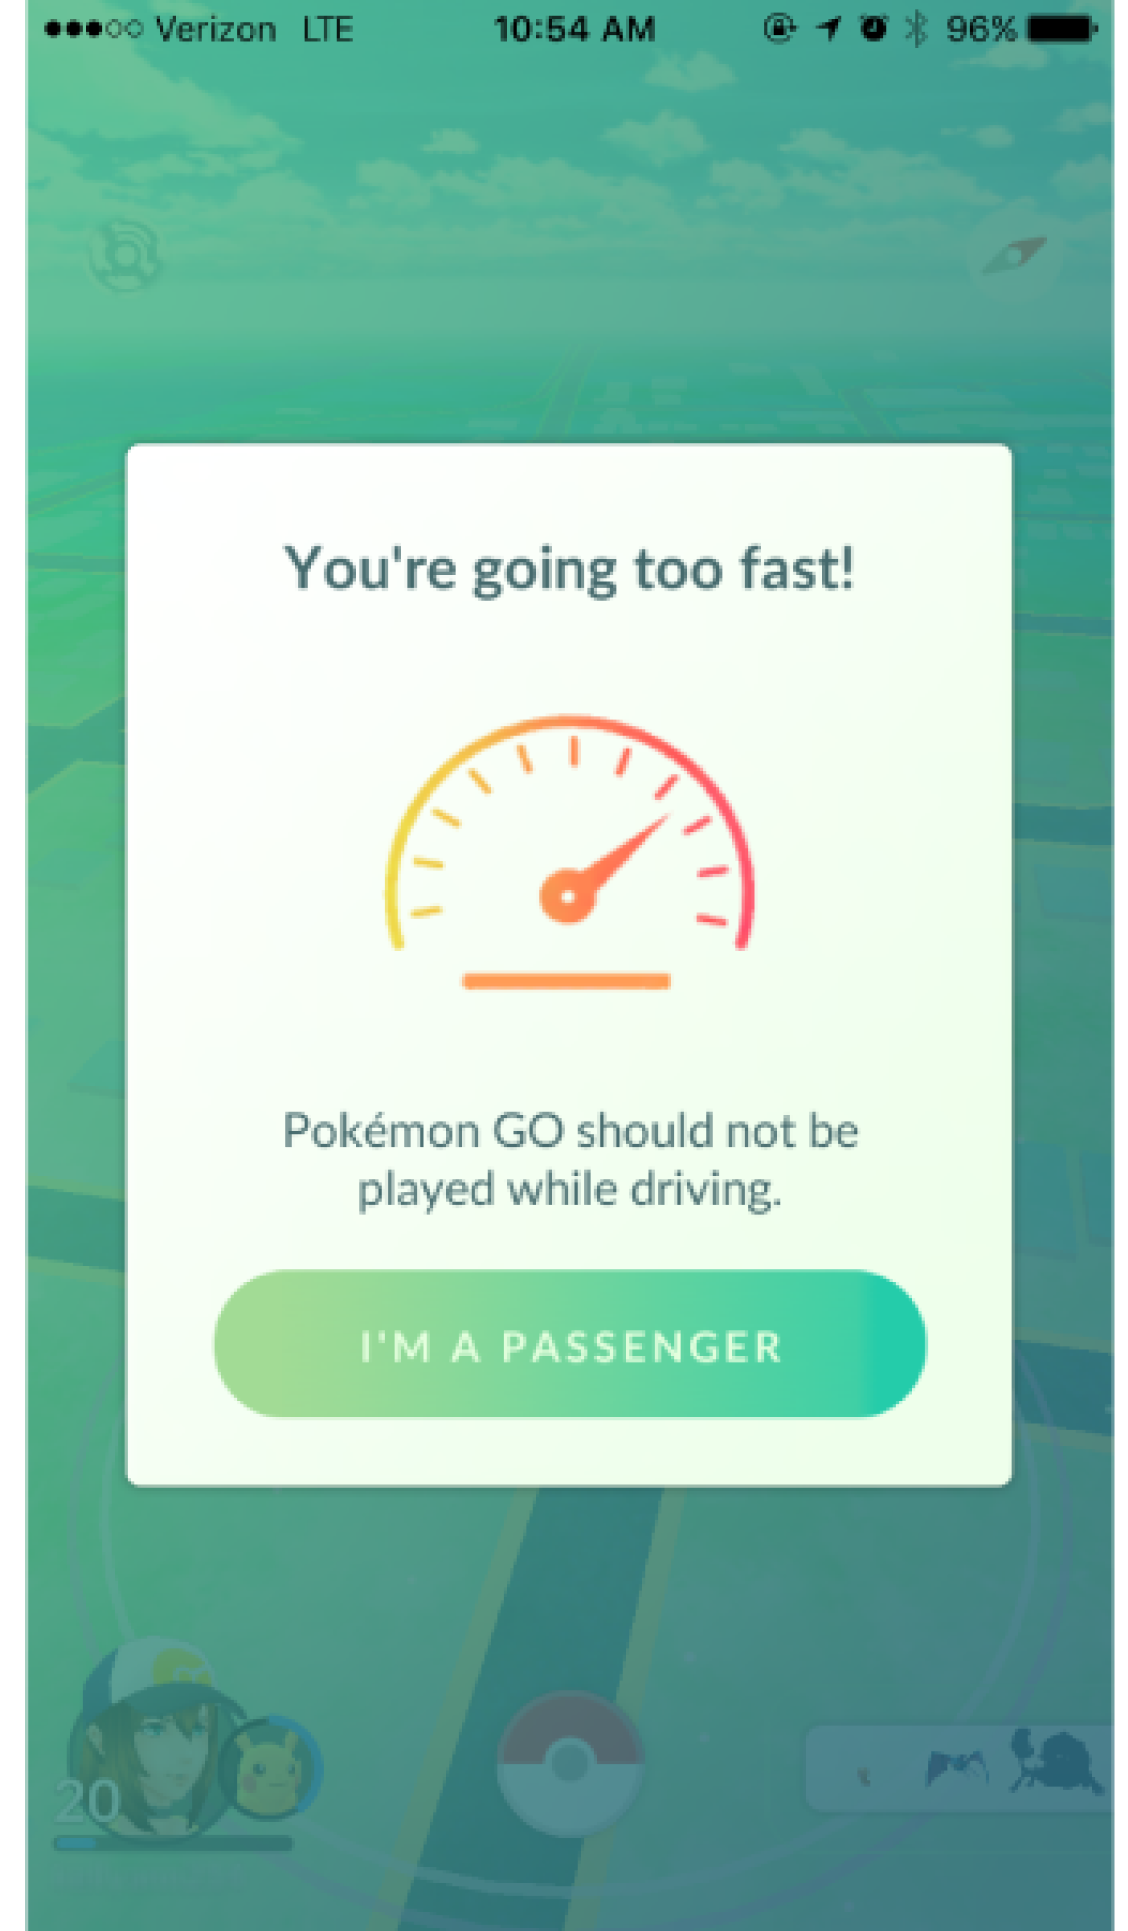 It probably would've ran anyway 🥲 #pokemonfail #pokemongofail